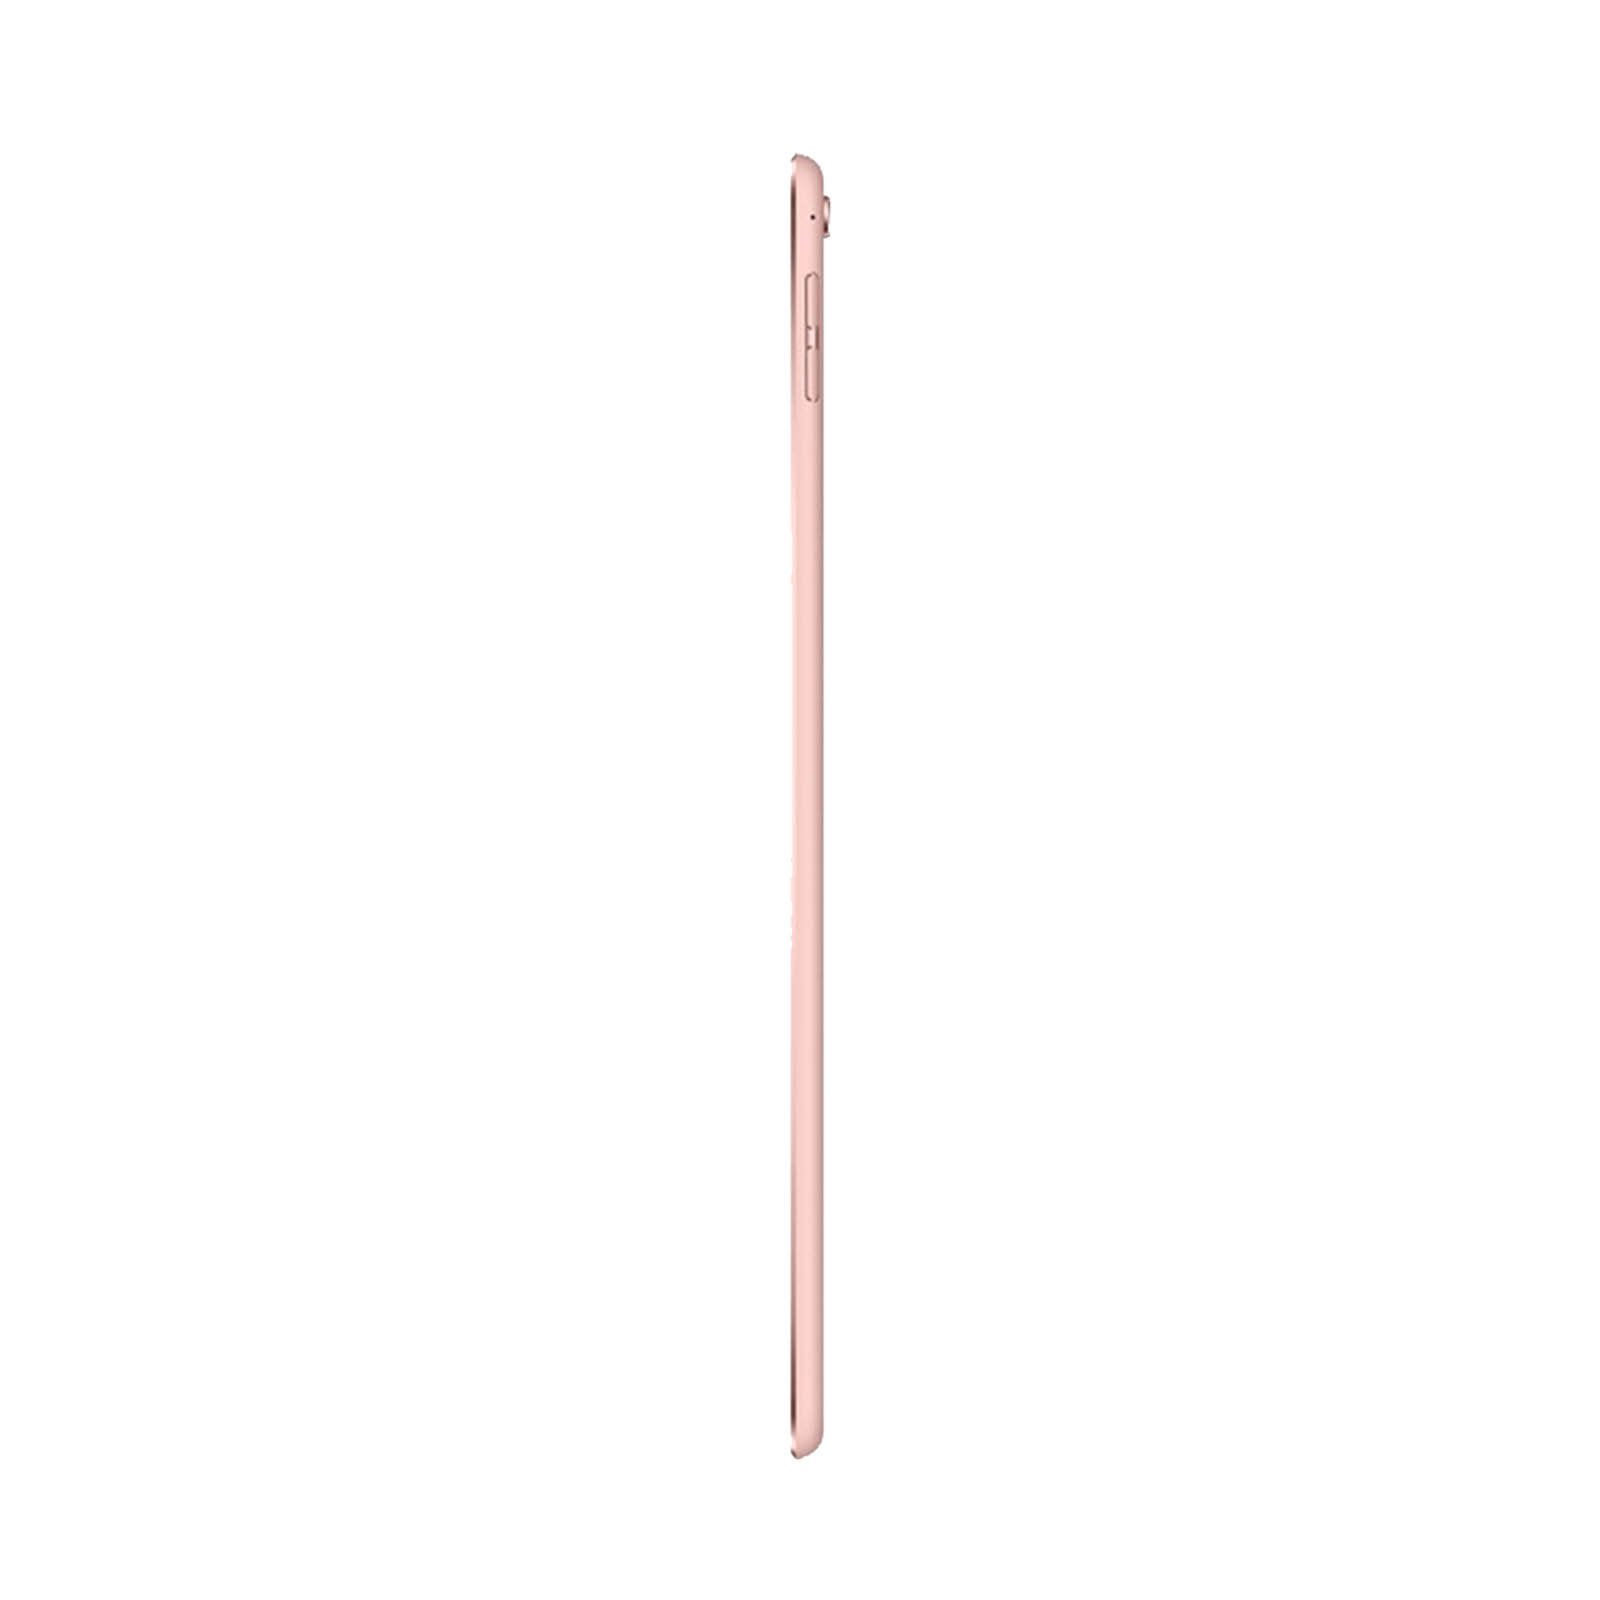 iPad Pro 9.7 Inch 128GB Rose Gold Good - Unlocked